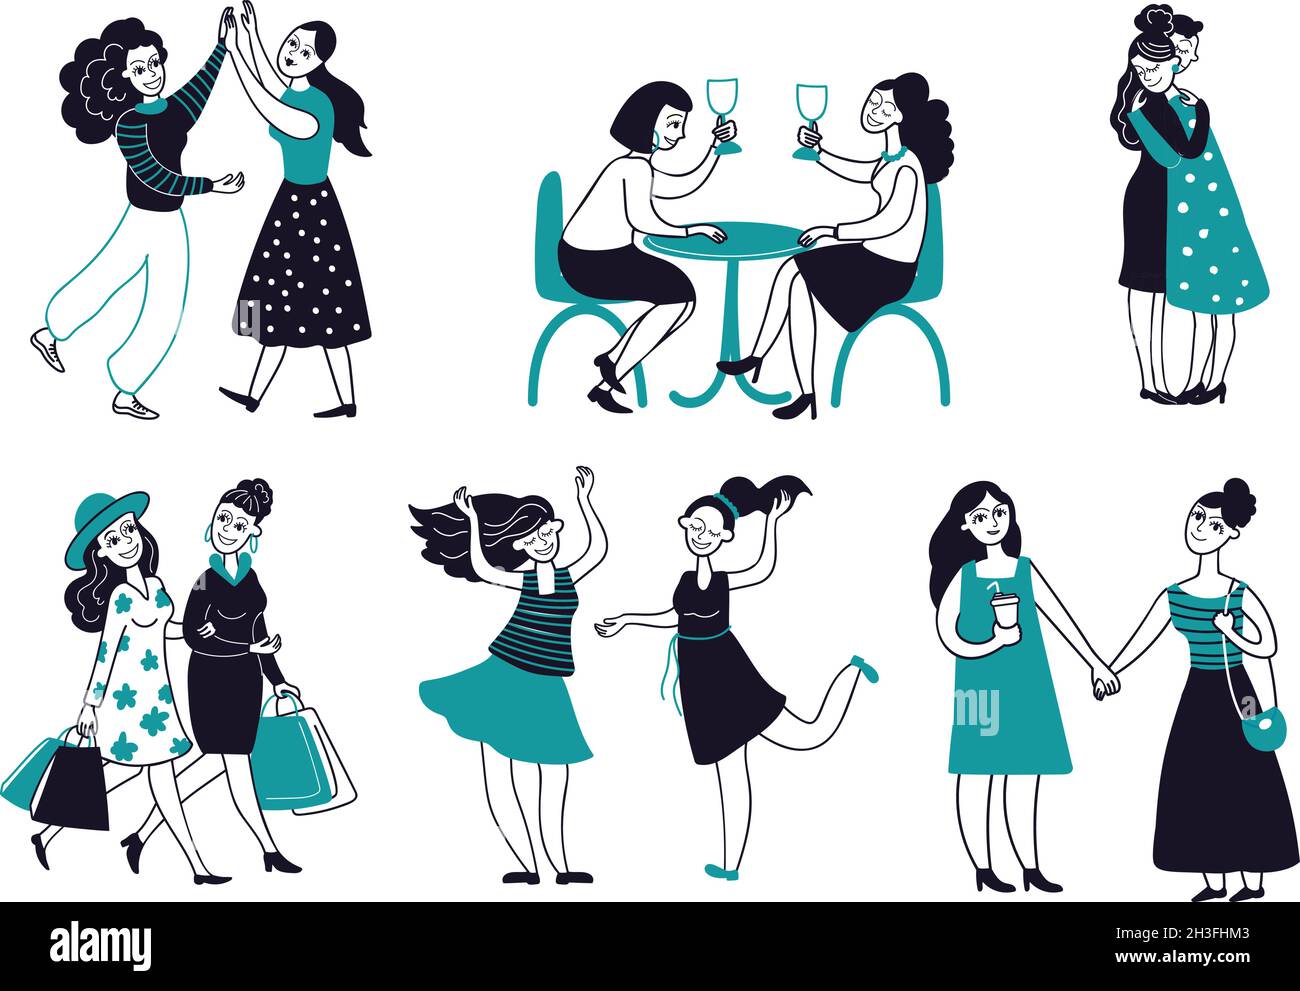 Female friendship. Girls friends together, women drink wine hugging meeting. Cartoon feminists characters, decent smiling woman dancing vector scenes Stock Vector